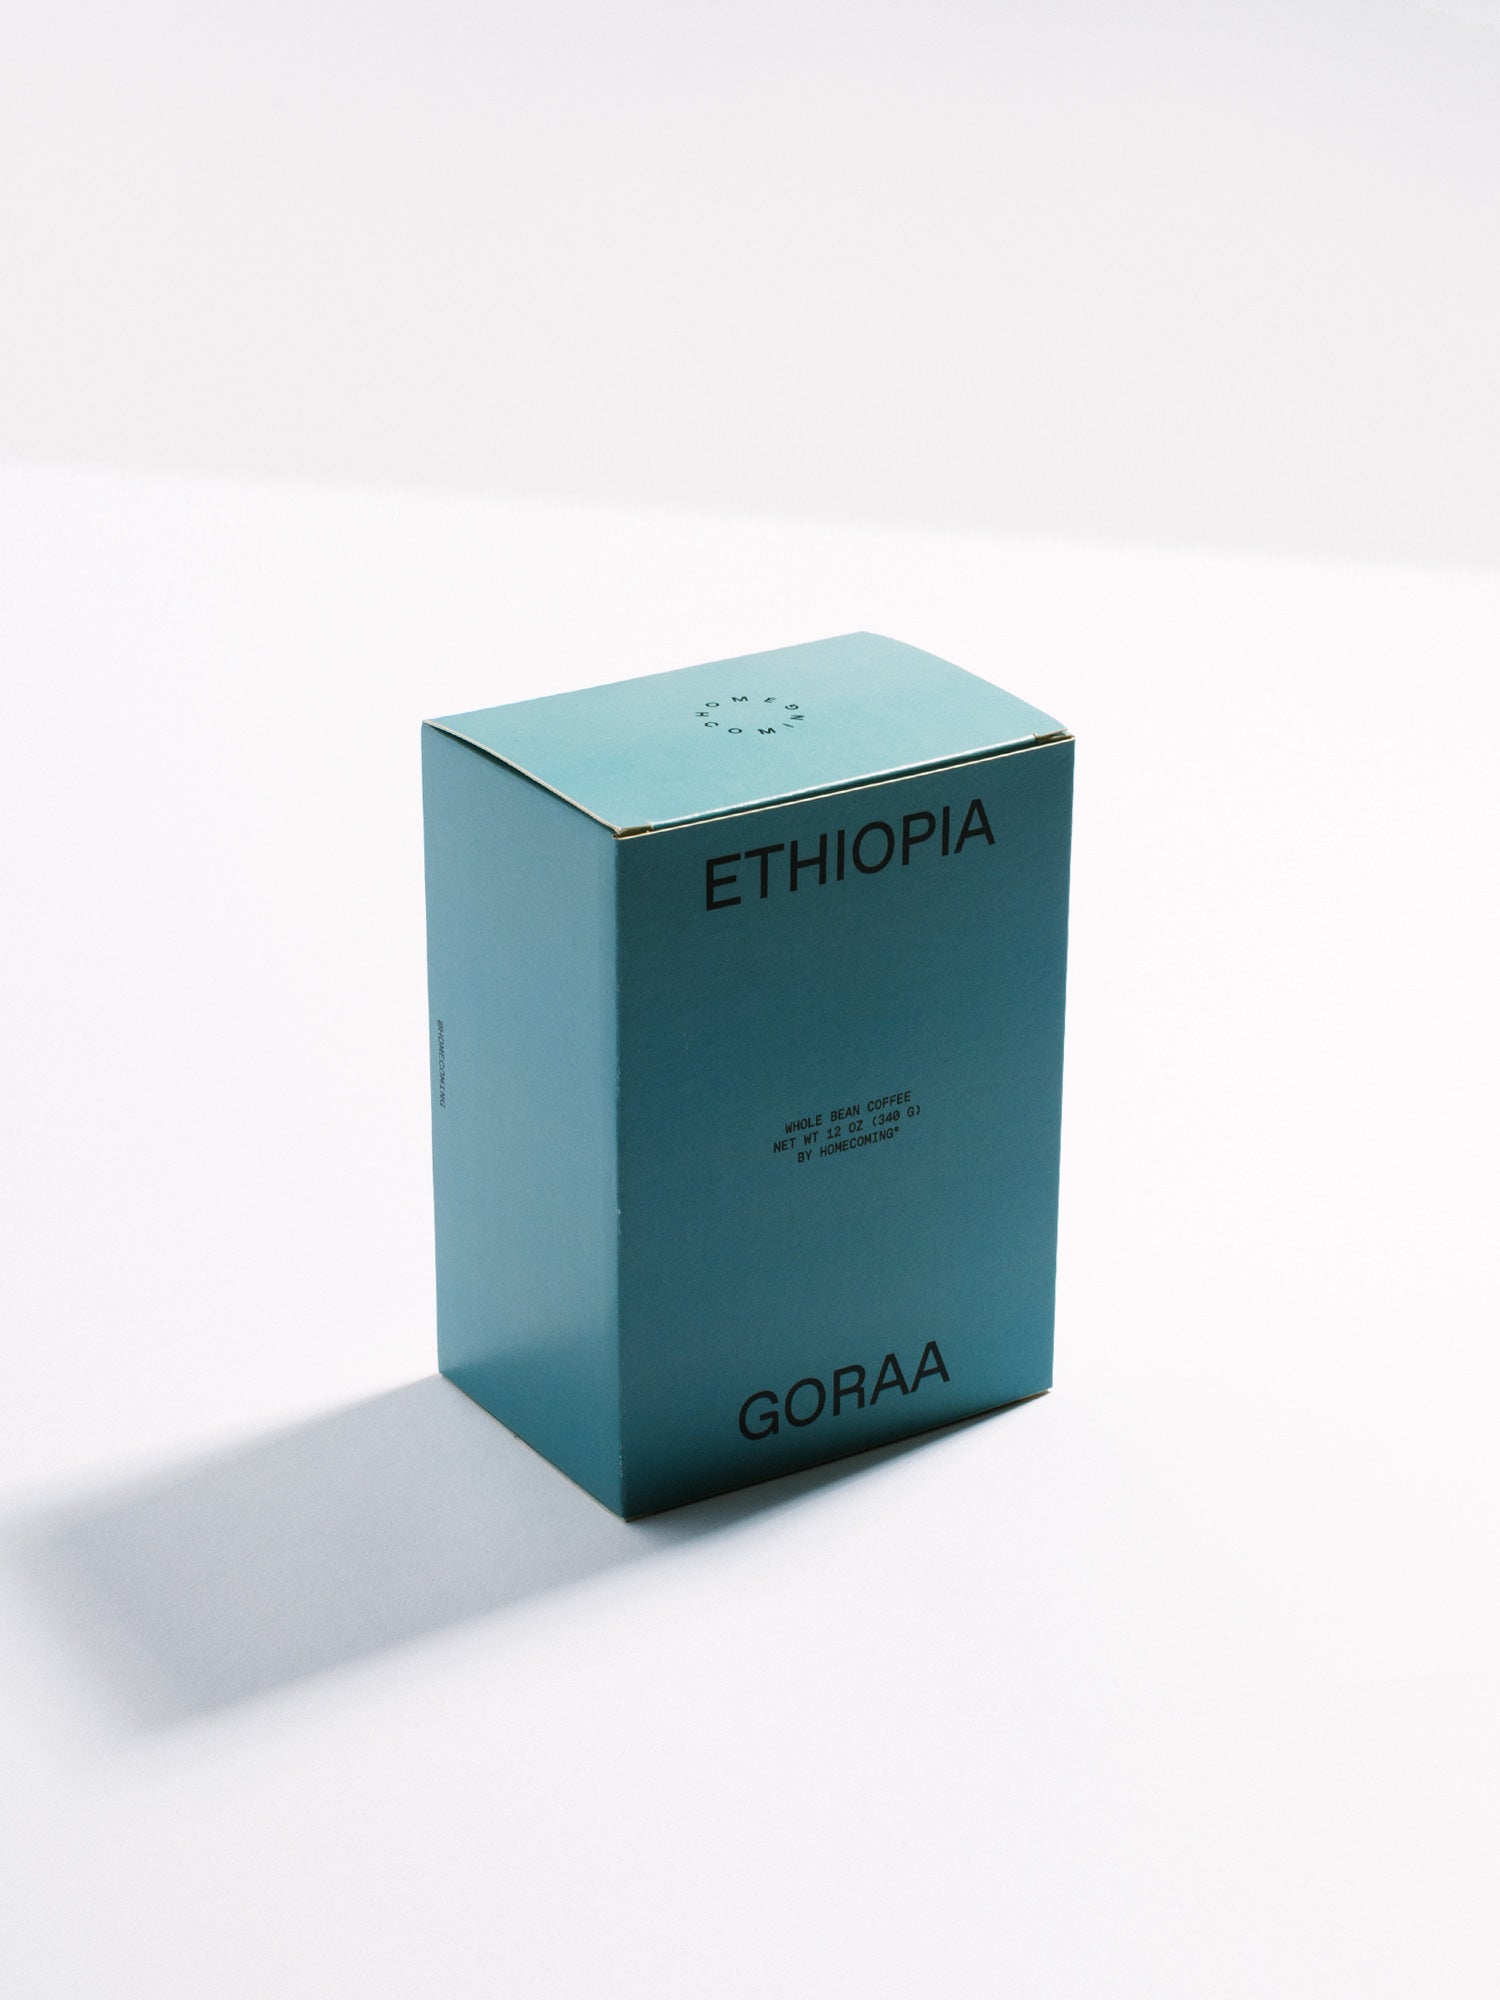 Ethiopia Goraa